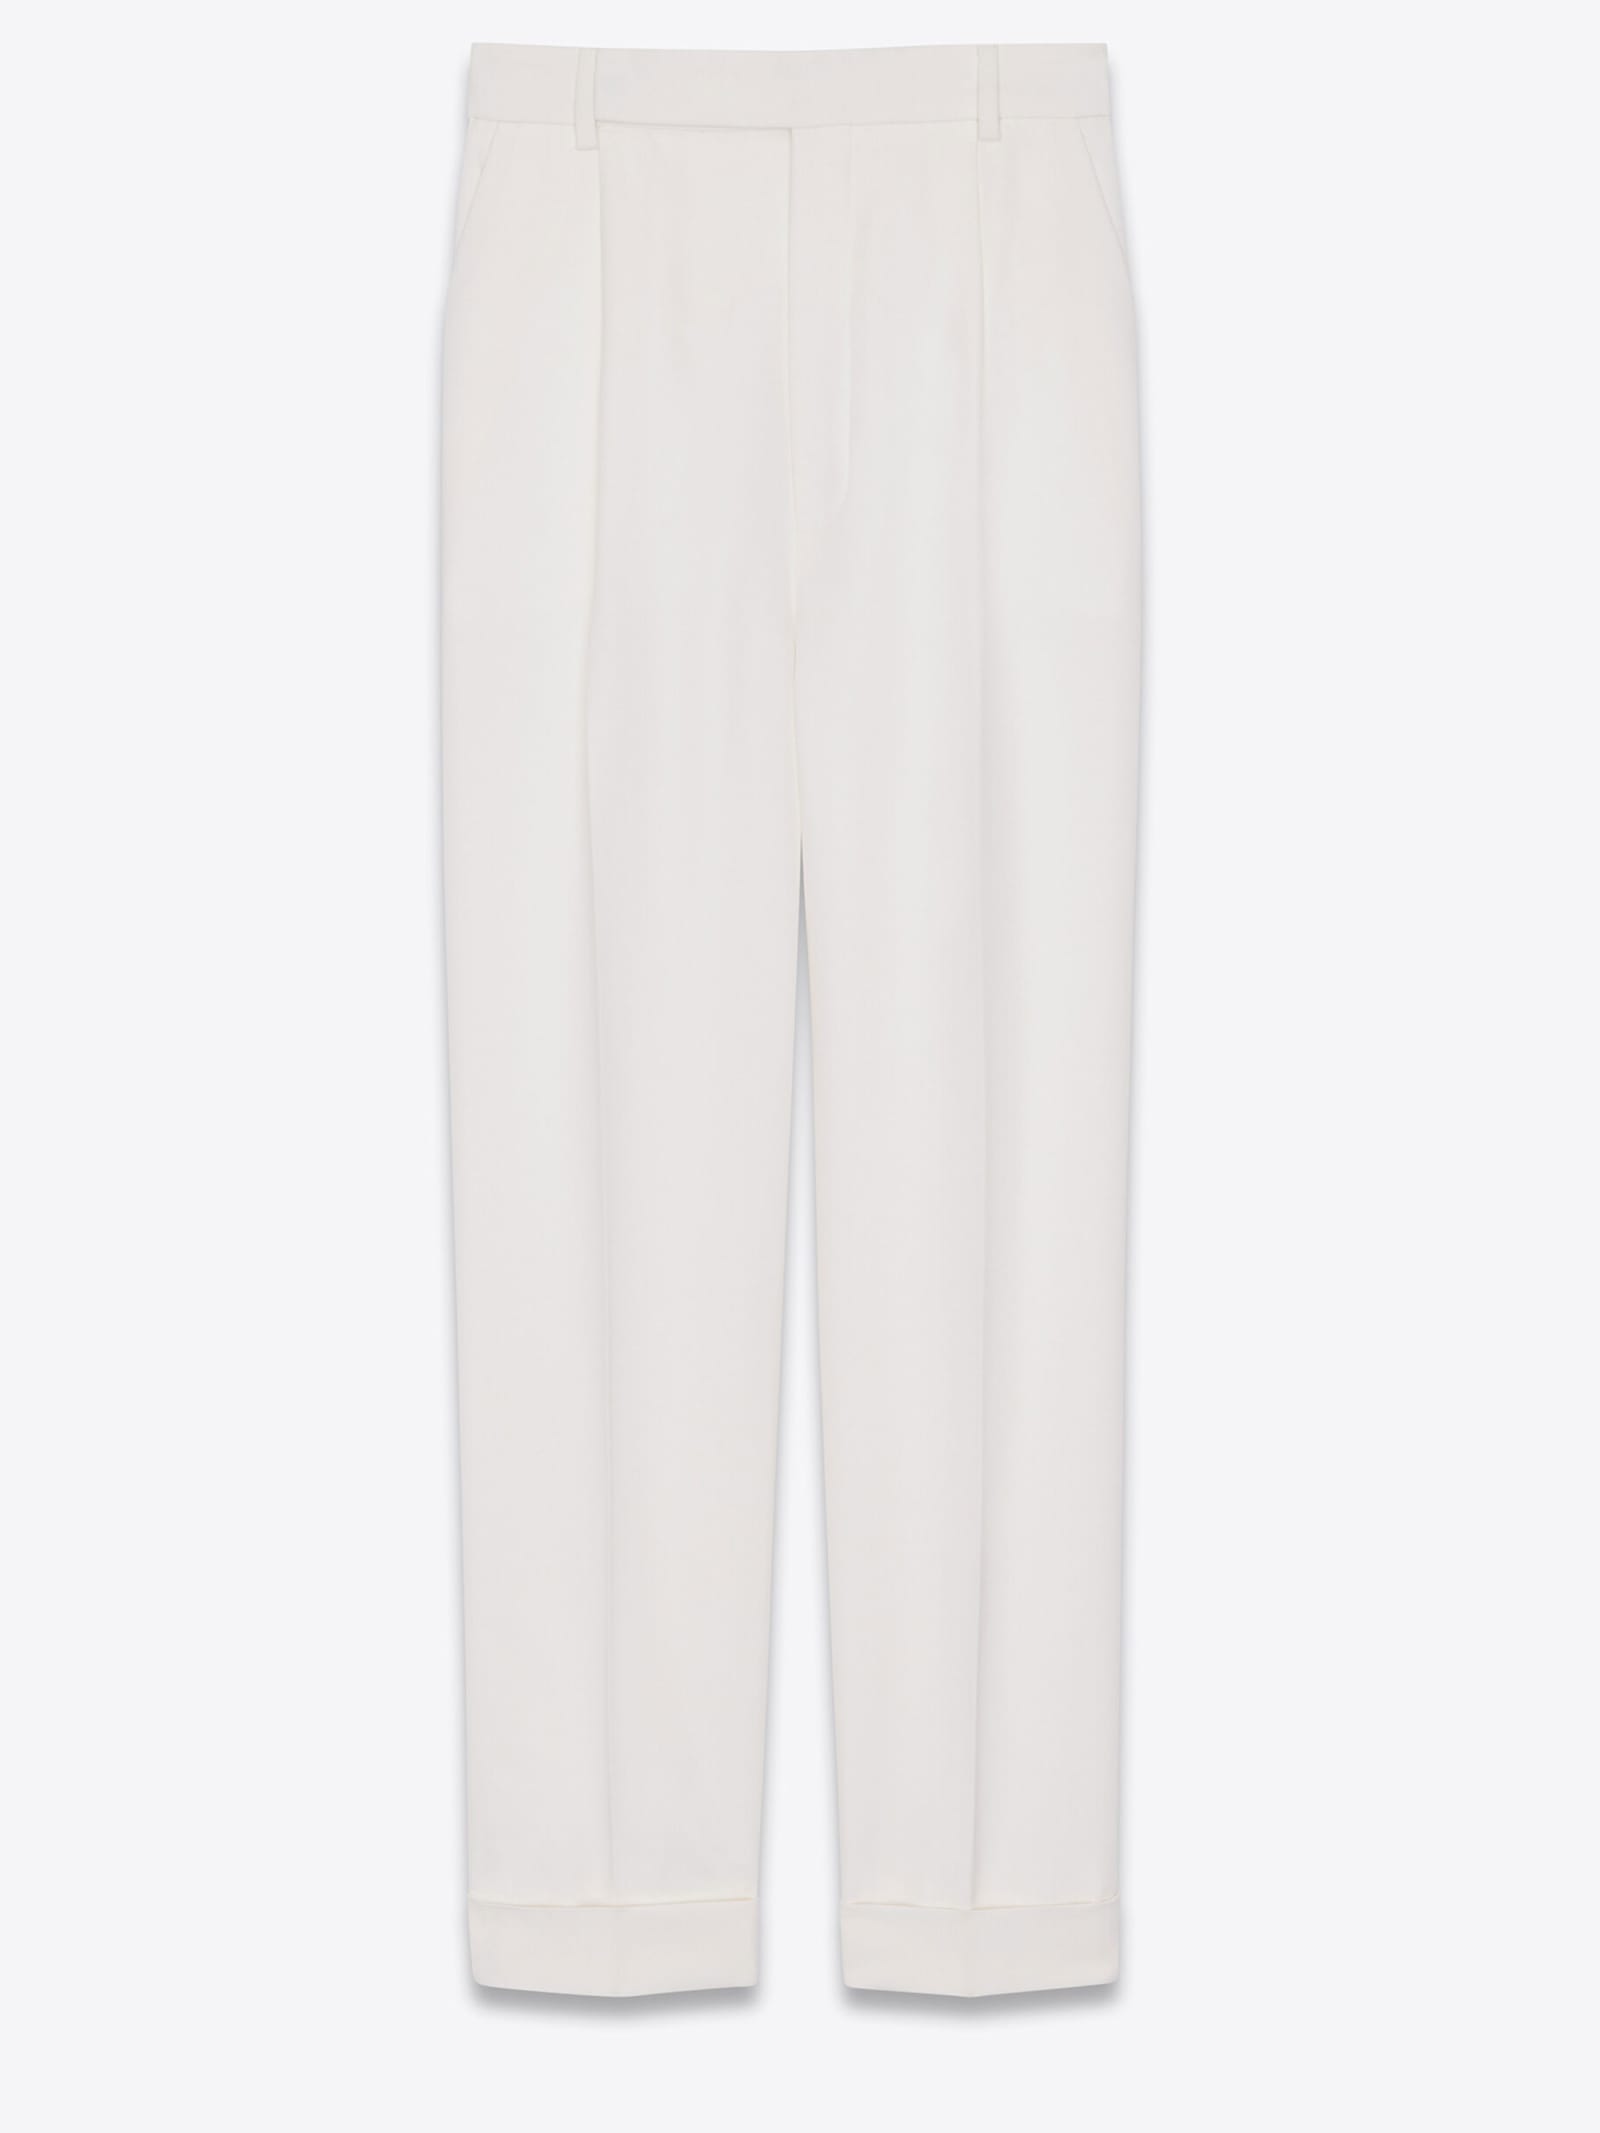 Saint Laurent White Tailored Trousers